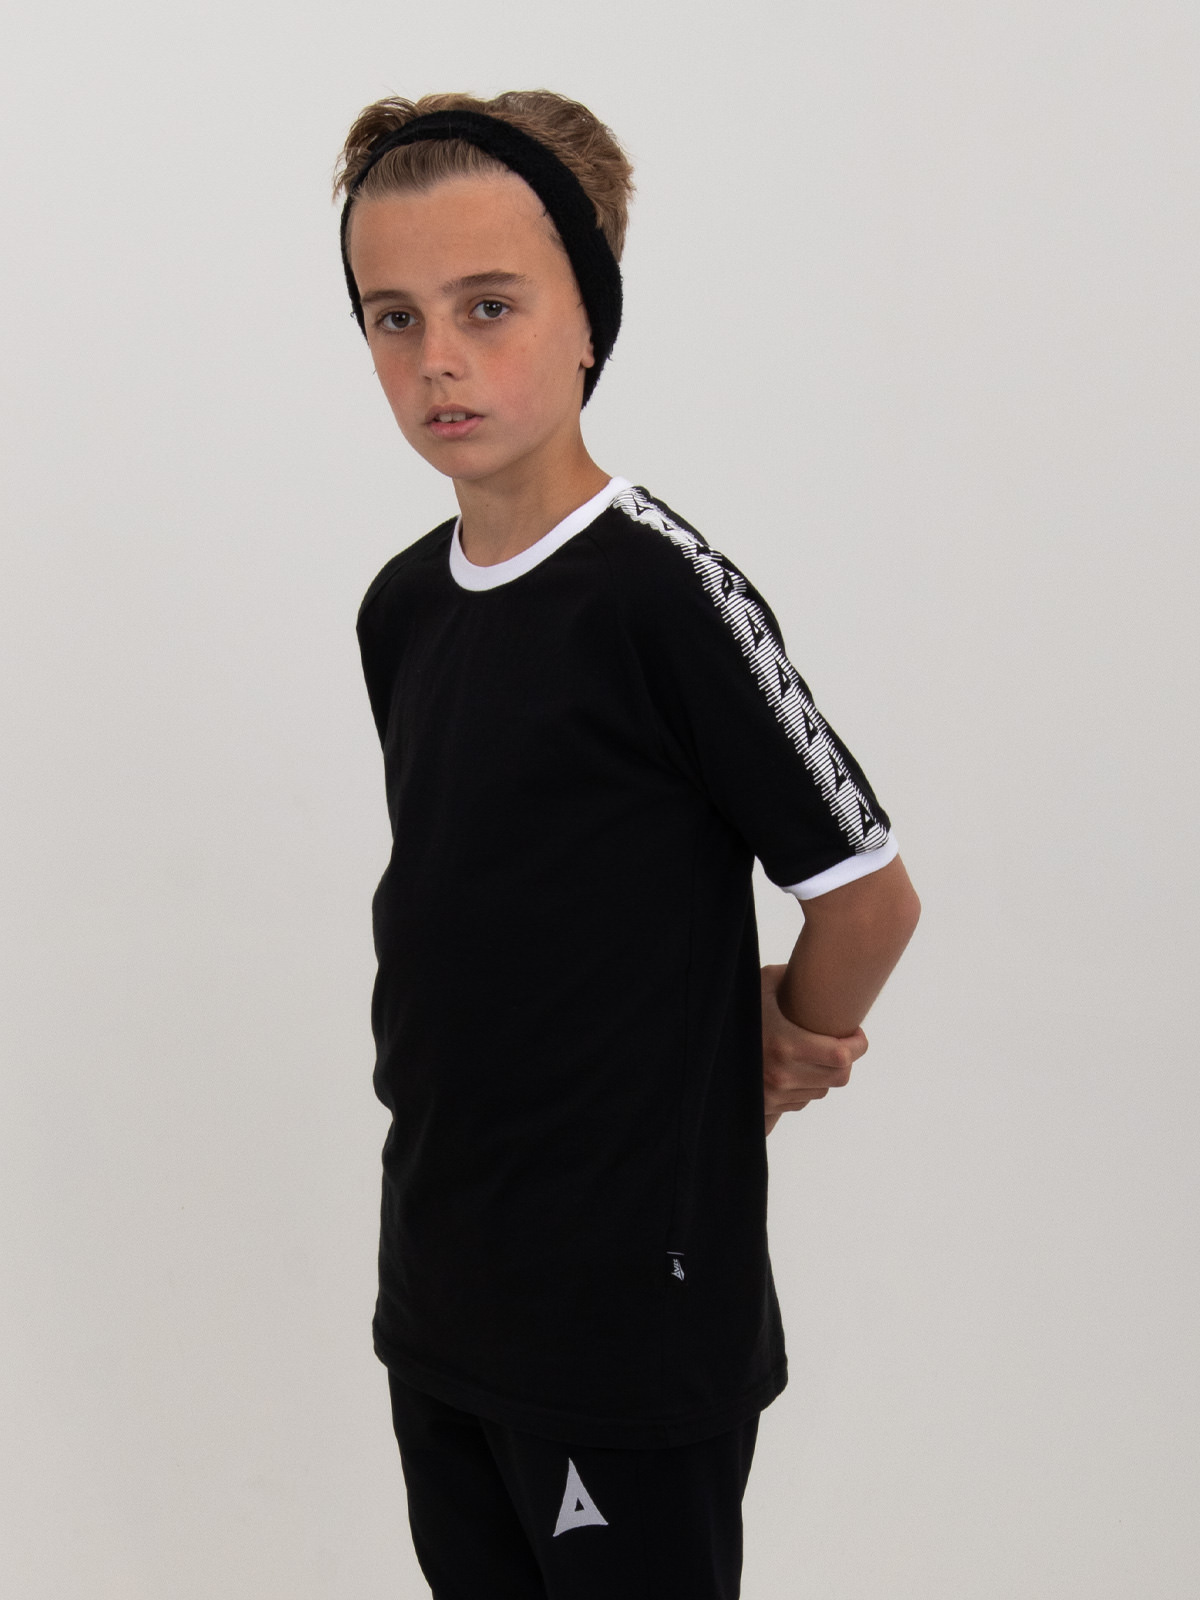 a kids plain black cotton t-shirt is bring worn by a child